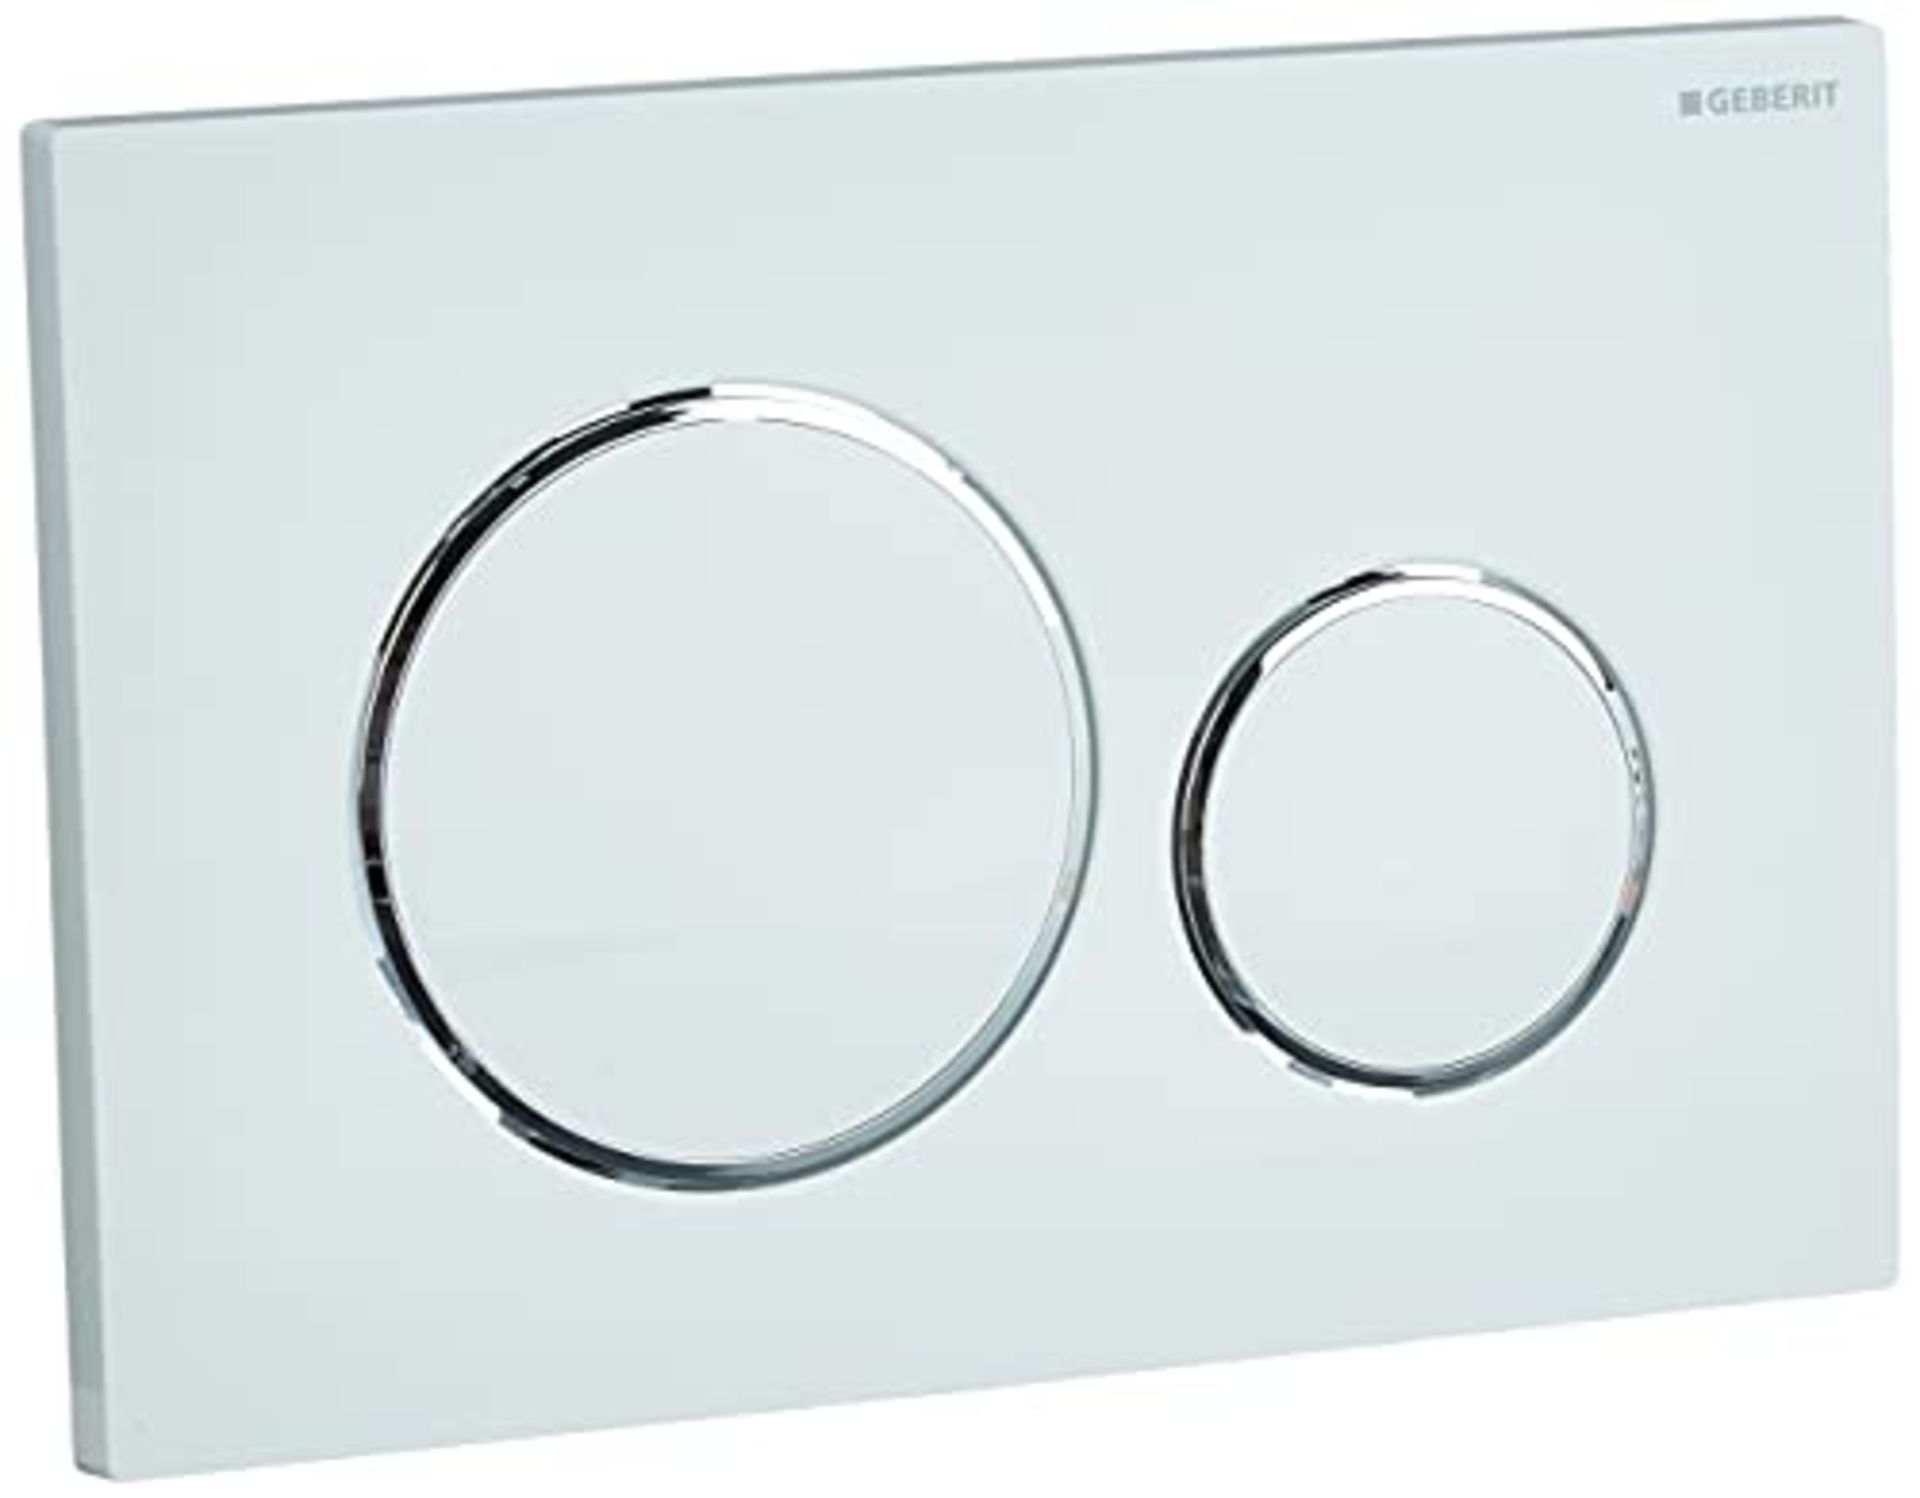 RRP £75.00 Geberit cist. EMP./Push Buttons Switch sigma-20 Plastic, white (bright chrome)